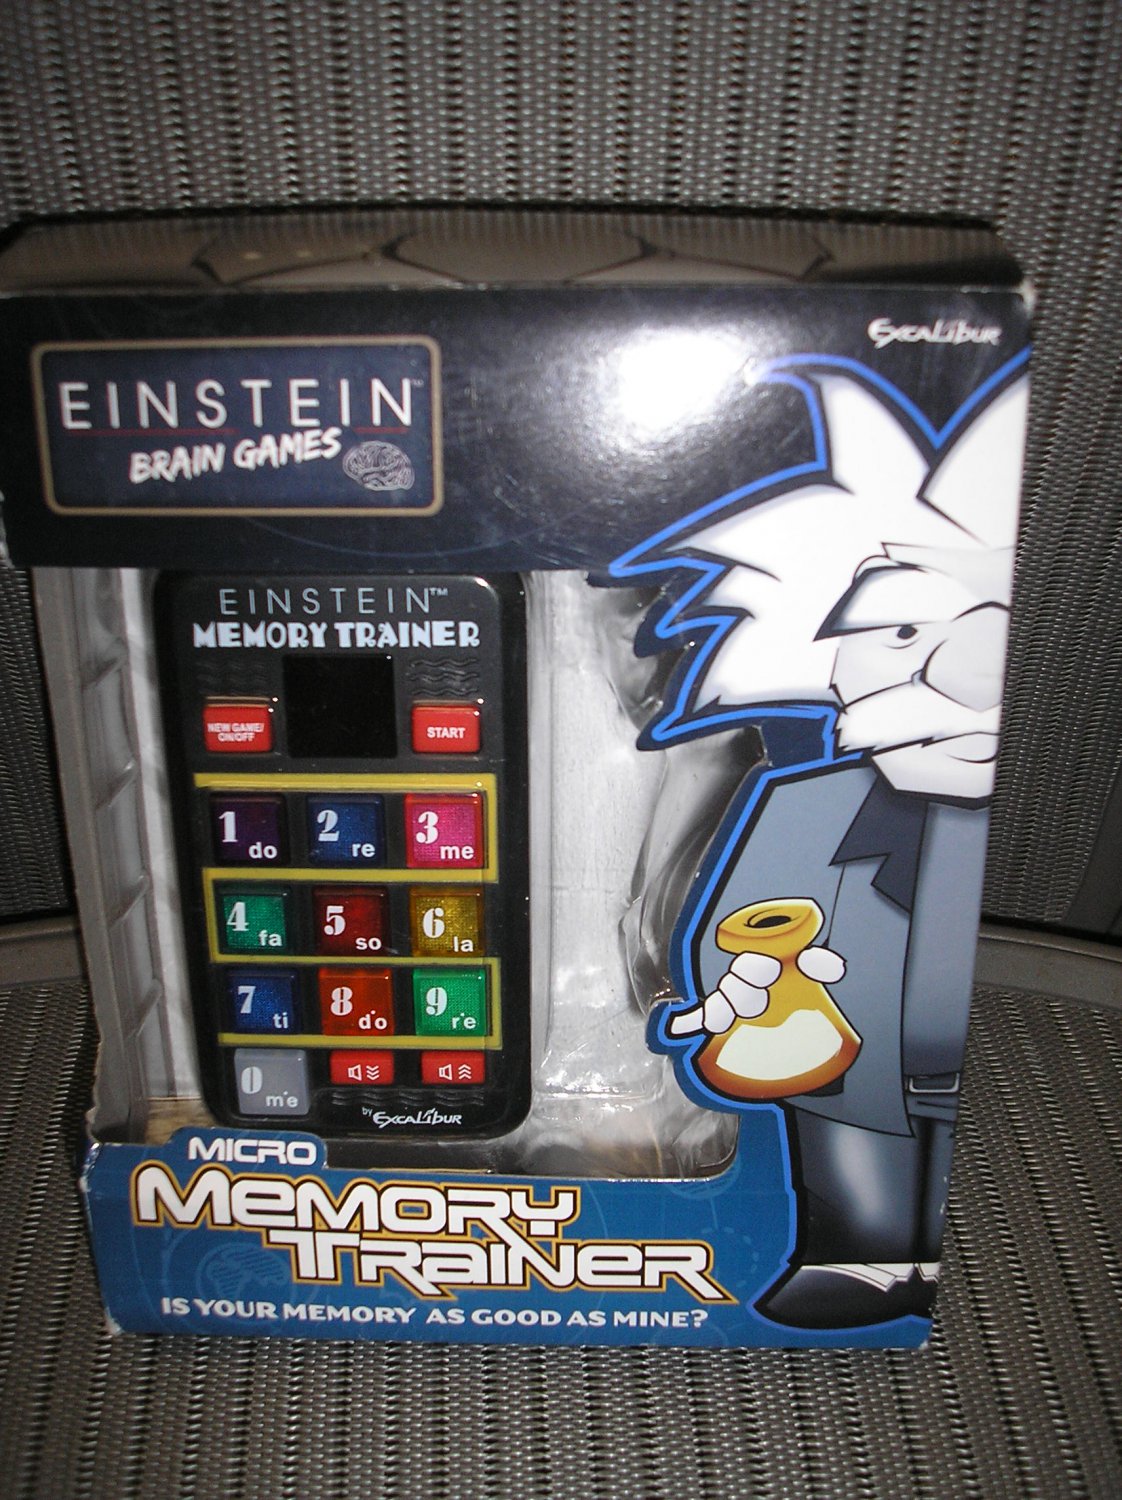 EXCALIBUR ELECTRONIC HANDHELD EINSTEIN BRAIN GAMES MEMORY TRAINER GAME!